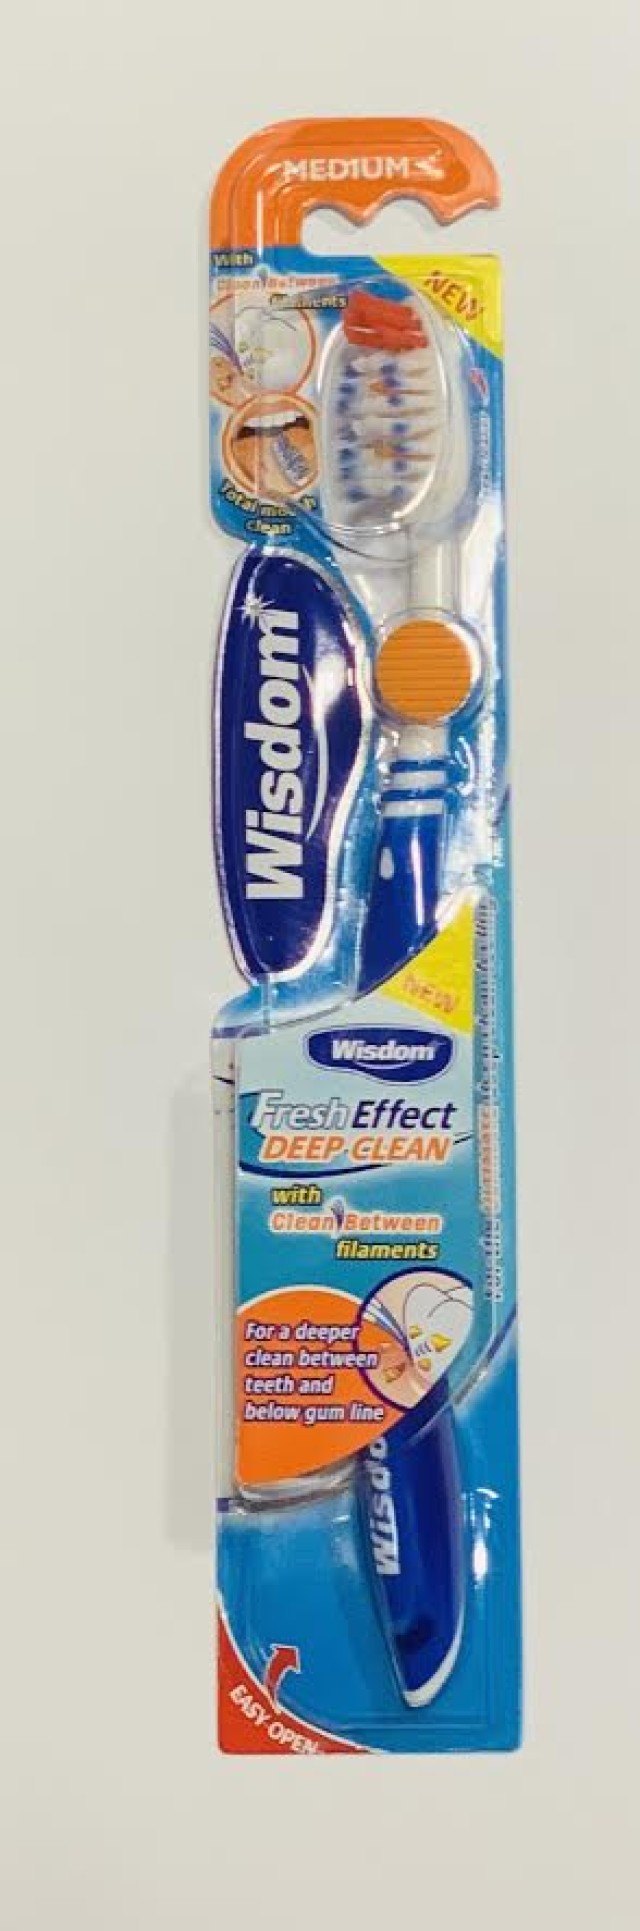 Wisdom Fresh Effect Deep Clean Toothbrush Medium Οδοντόβουρτσα Μαλακή Χρώμα:Μπλέ 1 Τεμάχιο